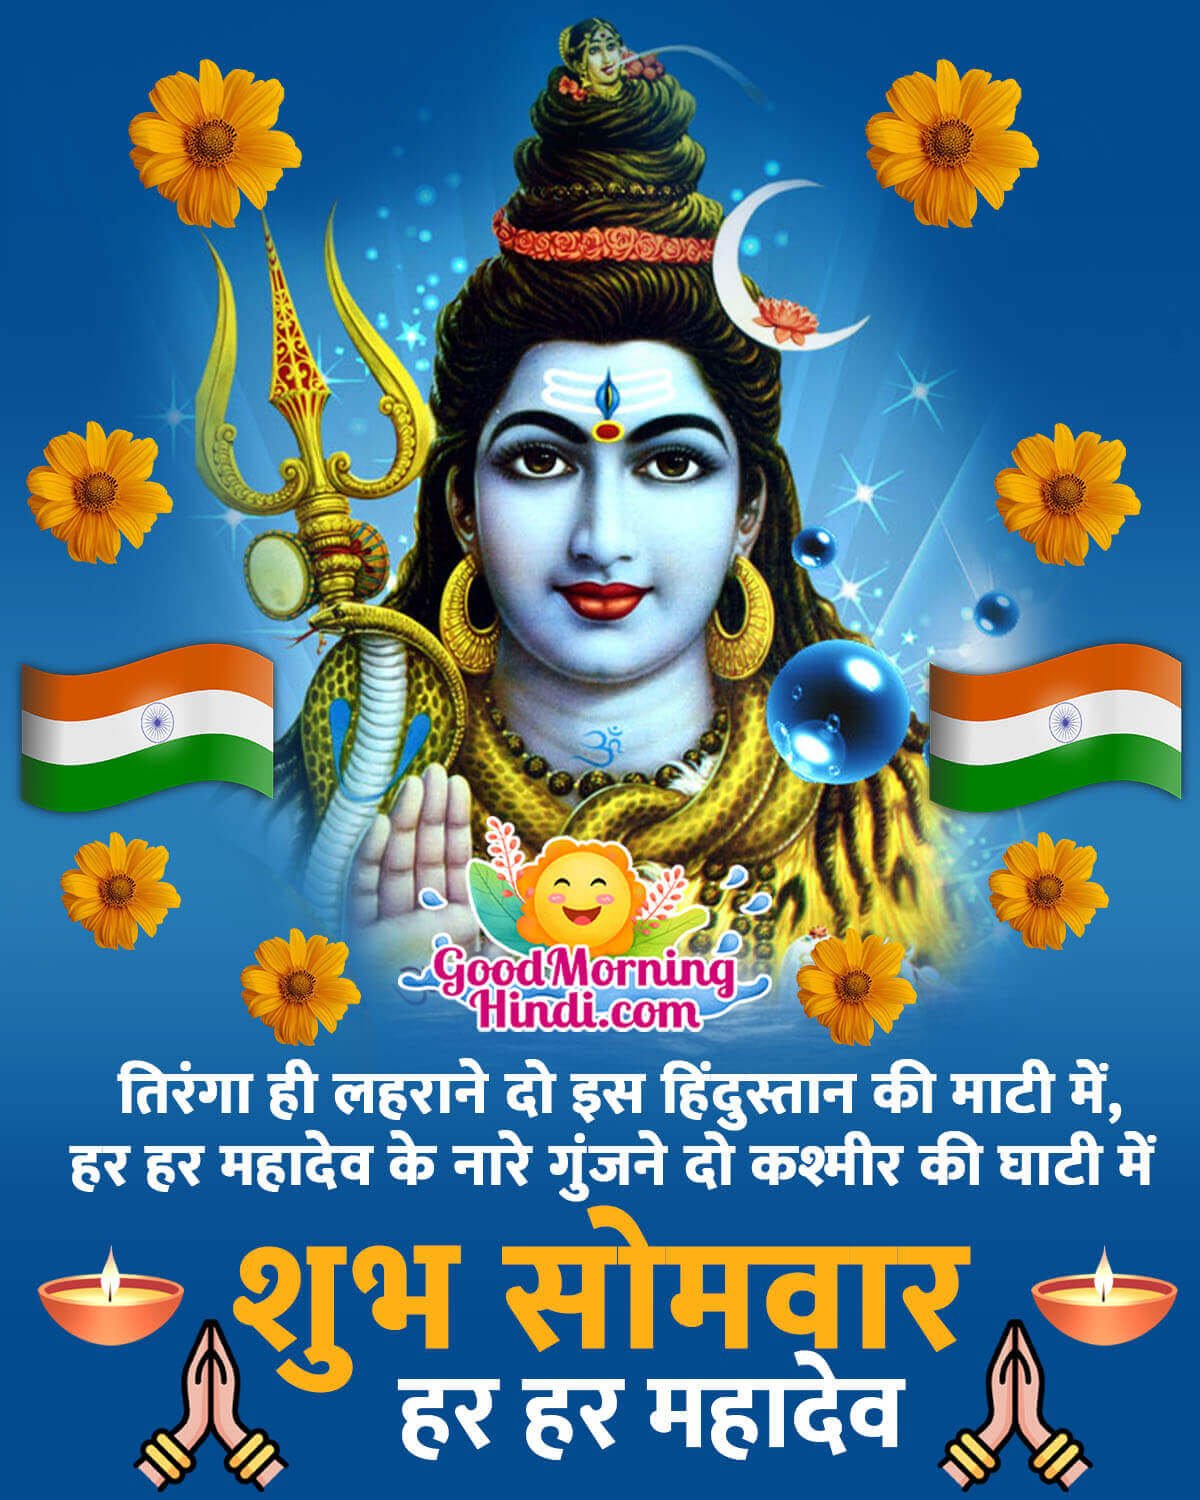 Lord Shiva Monday Good Morning Images in Hindi - Good Morning ...